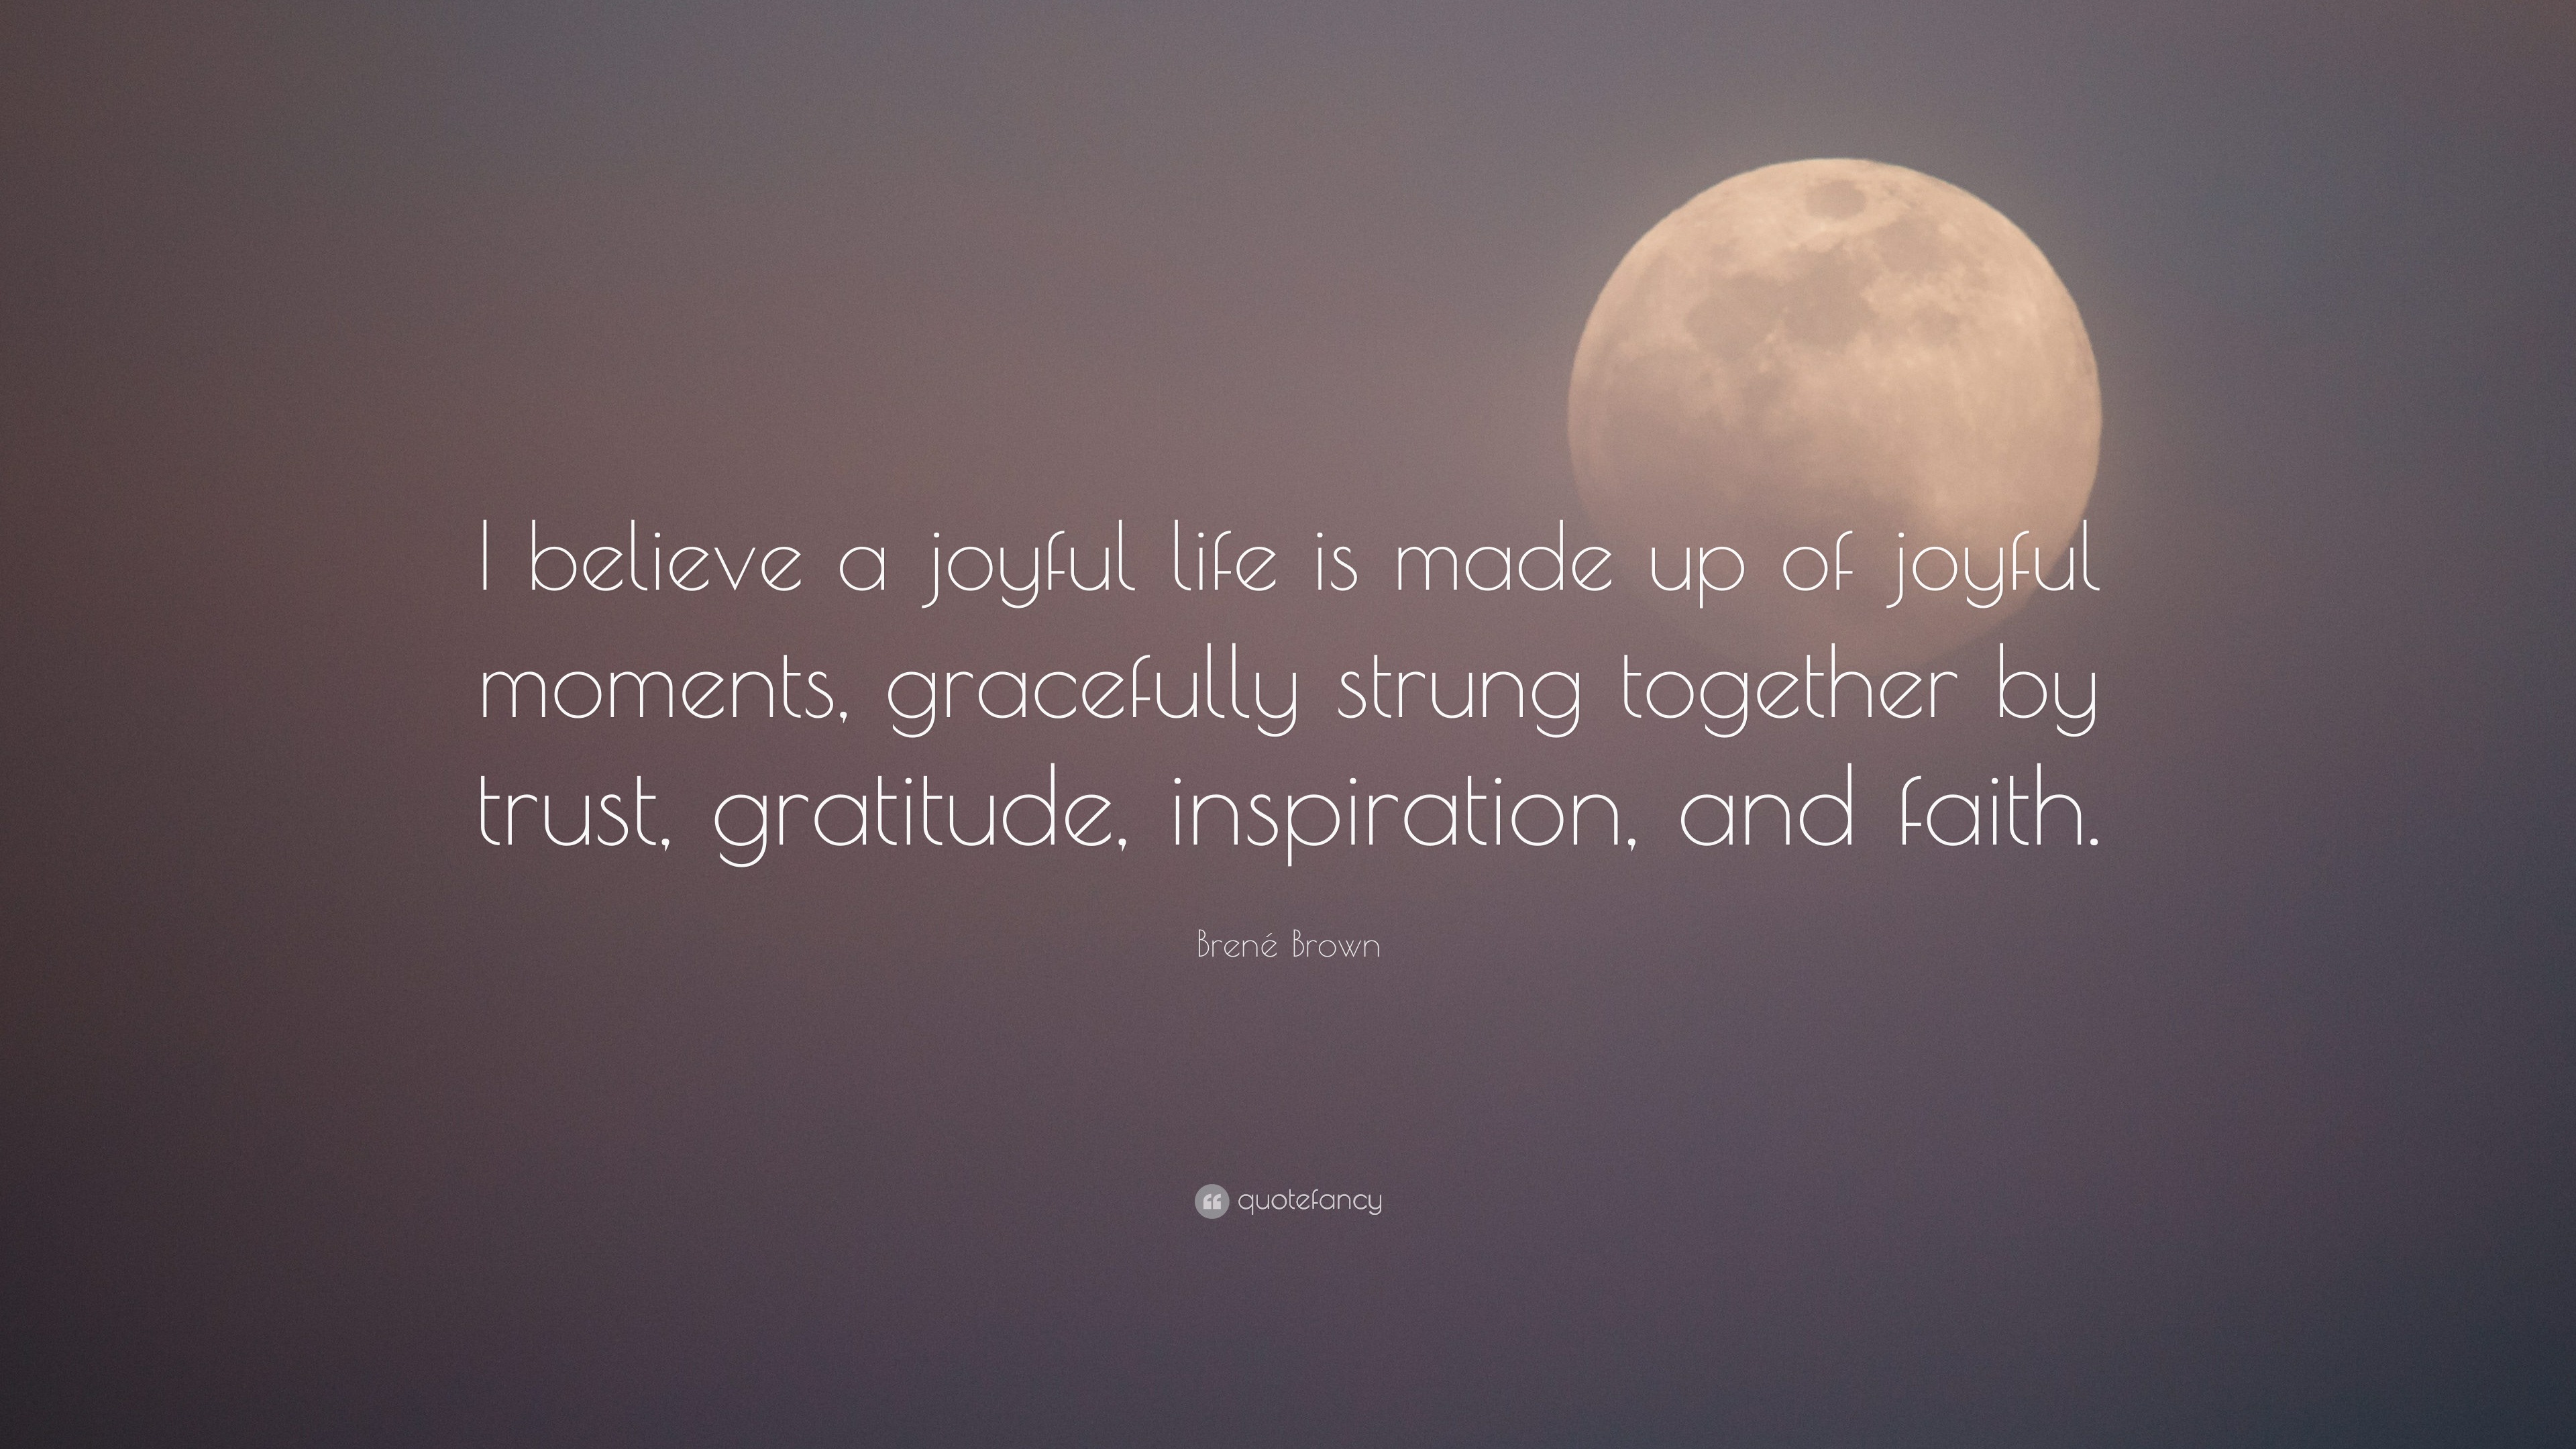 Brené Brown Quote: “I believe a joyful life is made up of joyful ...